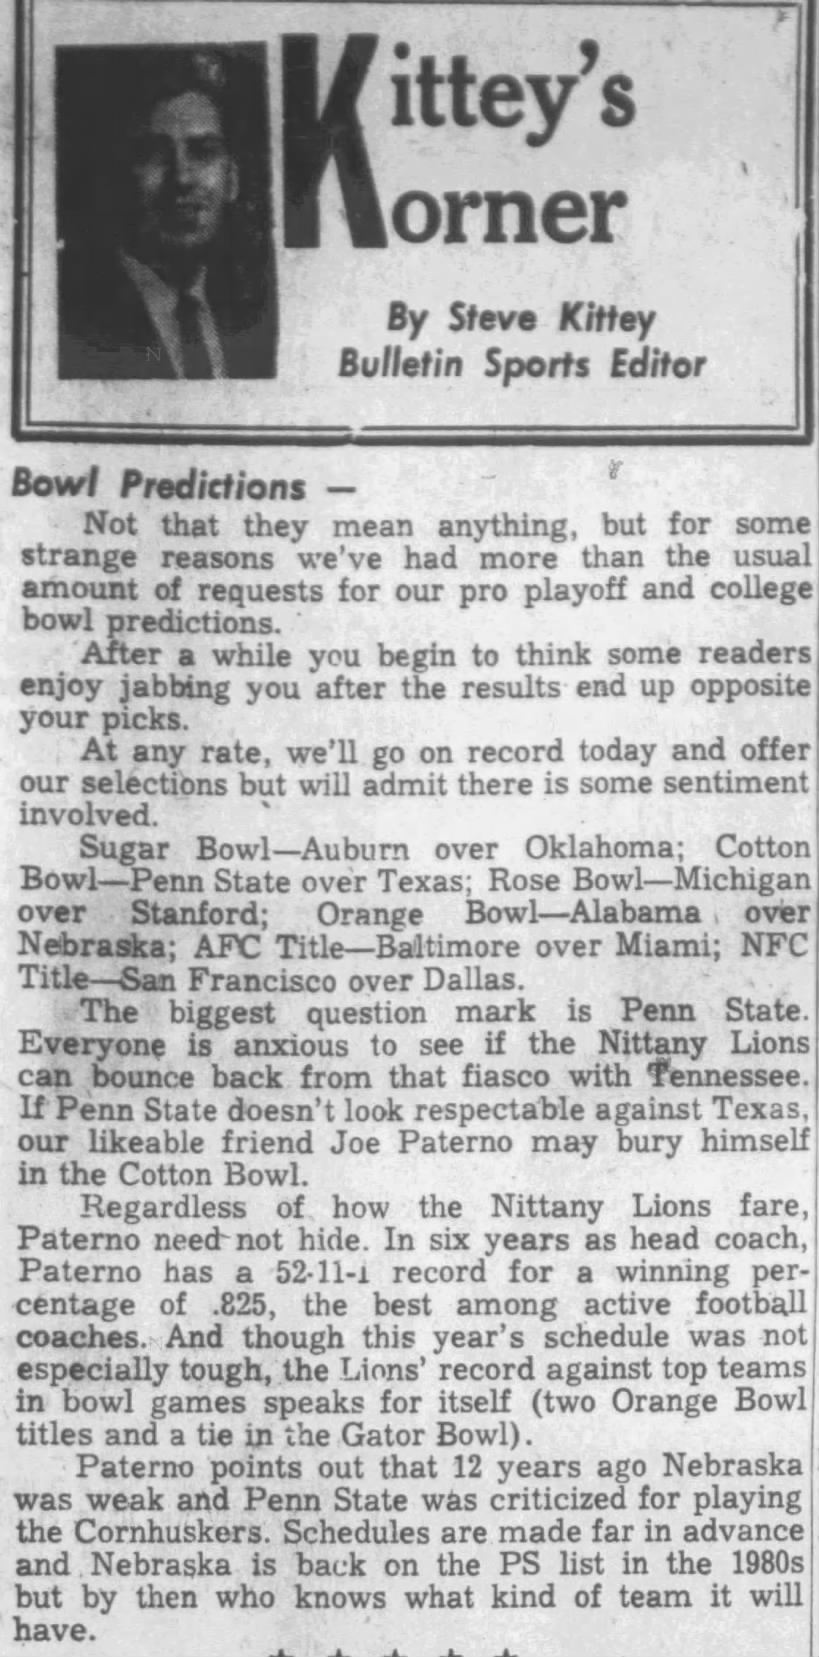 1972 Orange Bowl prediction, Latrobe